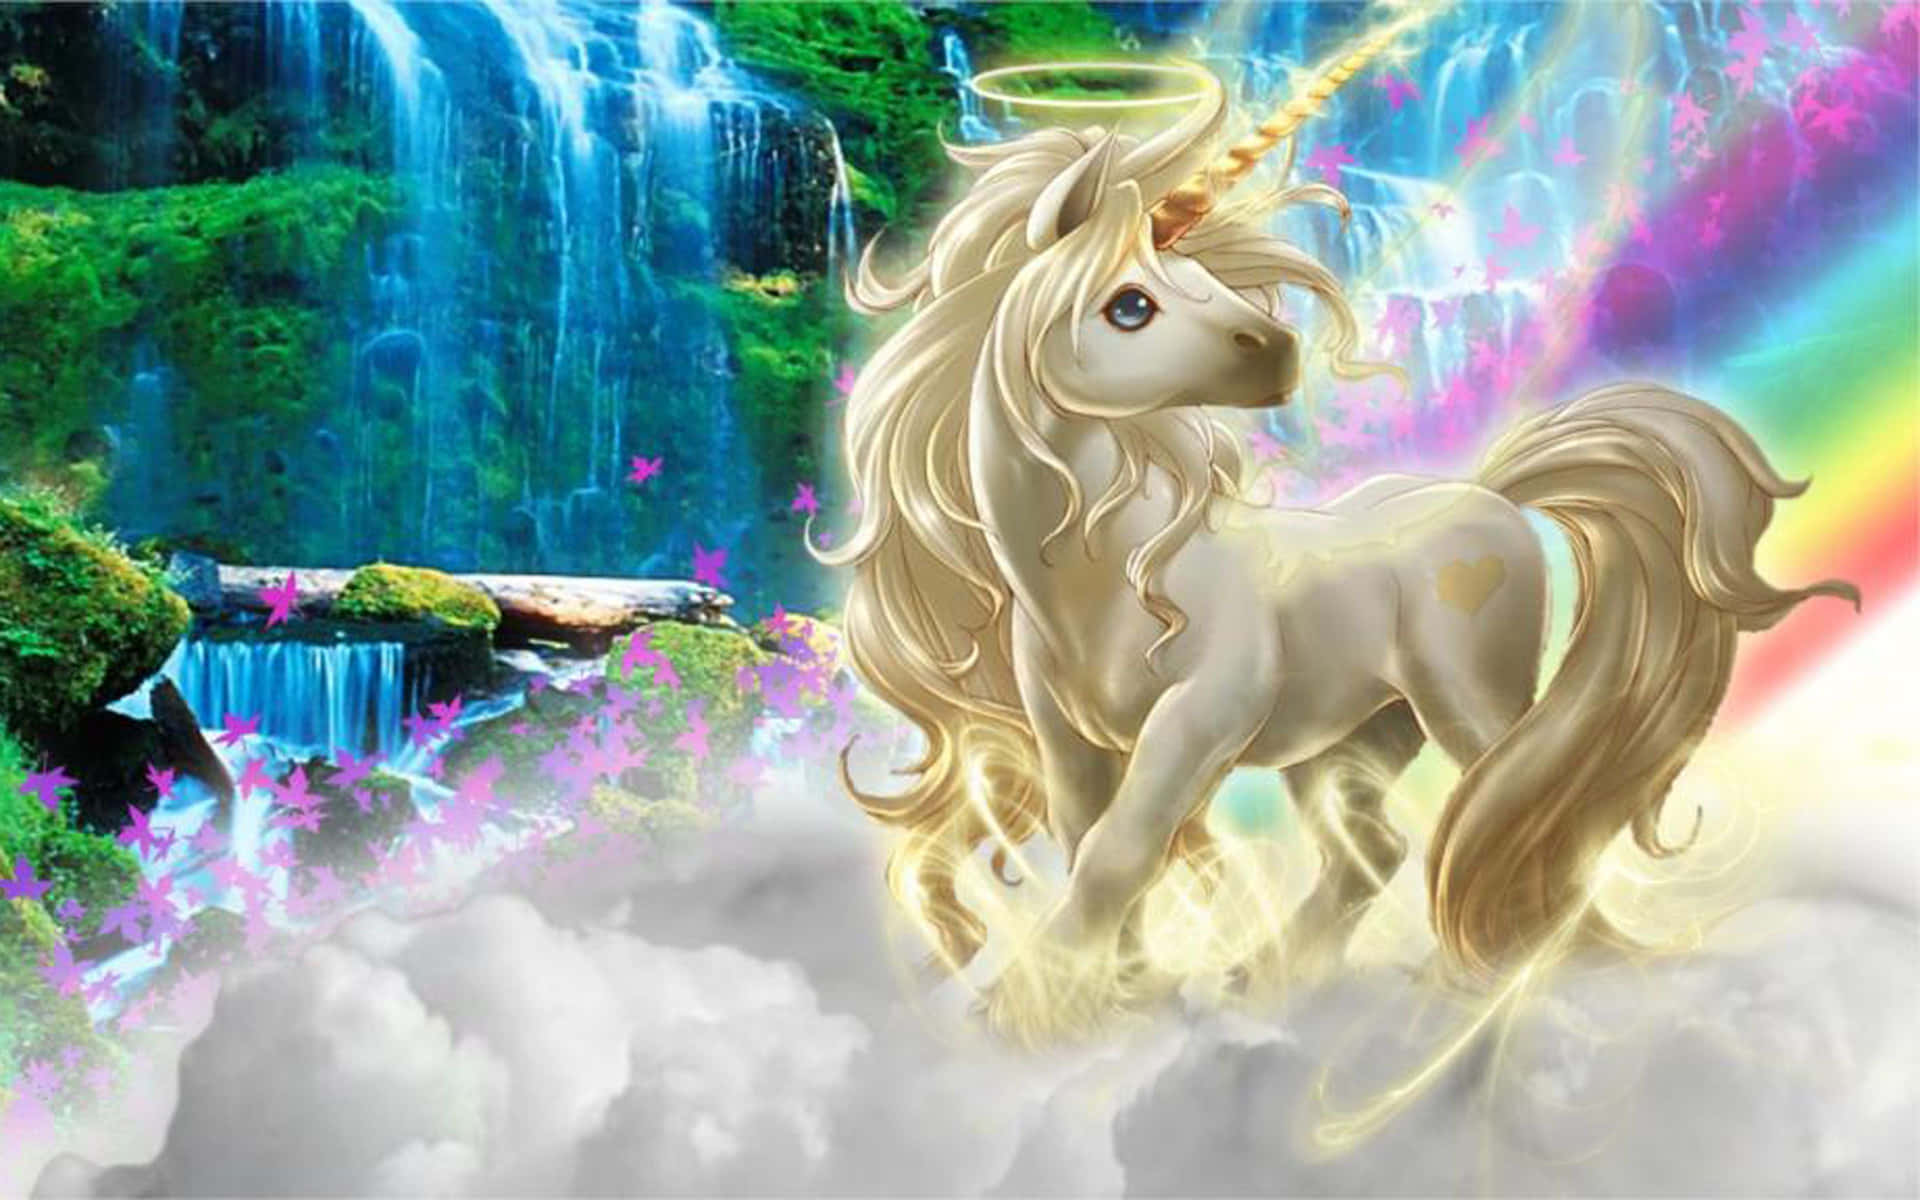 Majestic 3D Unicorn in a Magical World Wallpaper